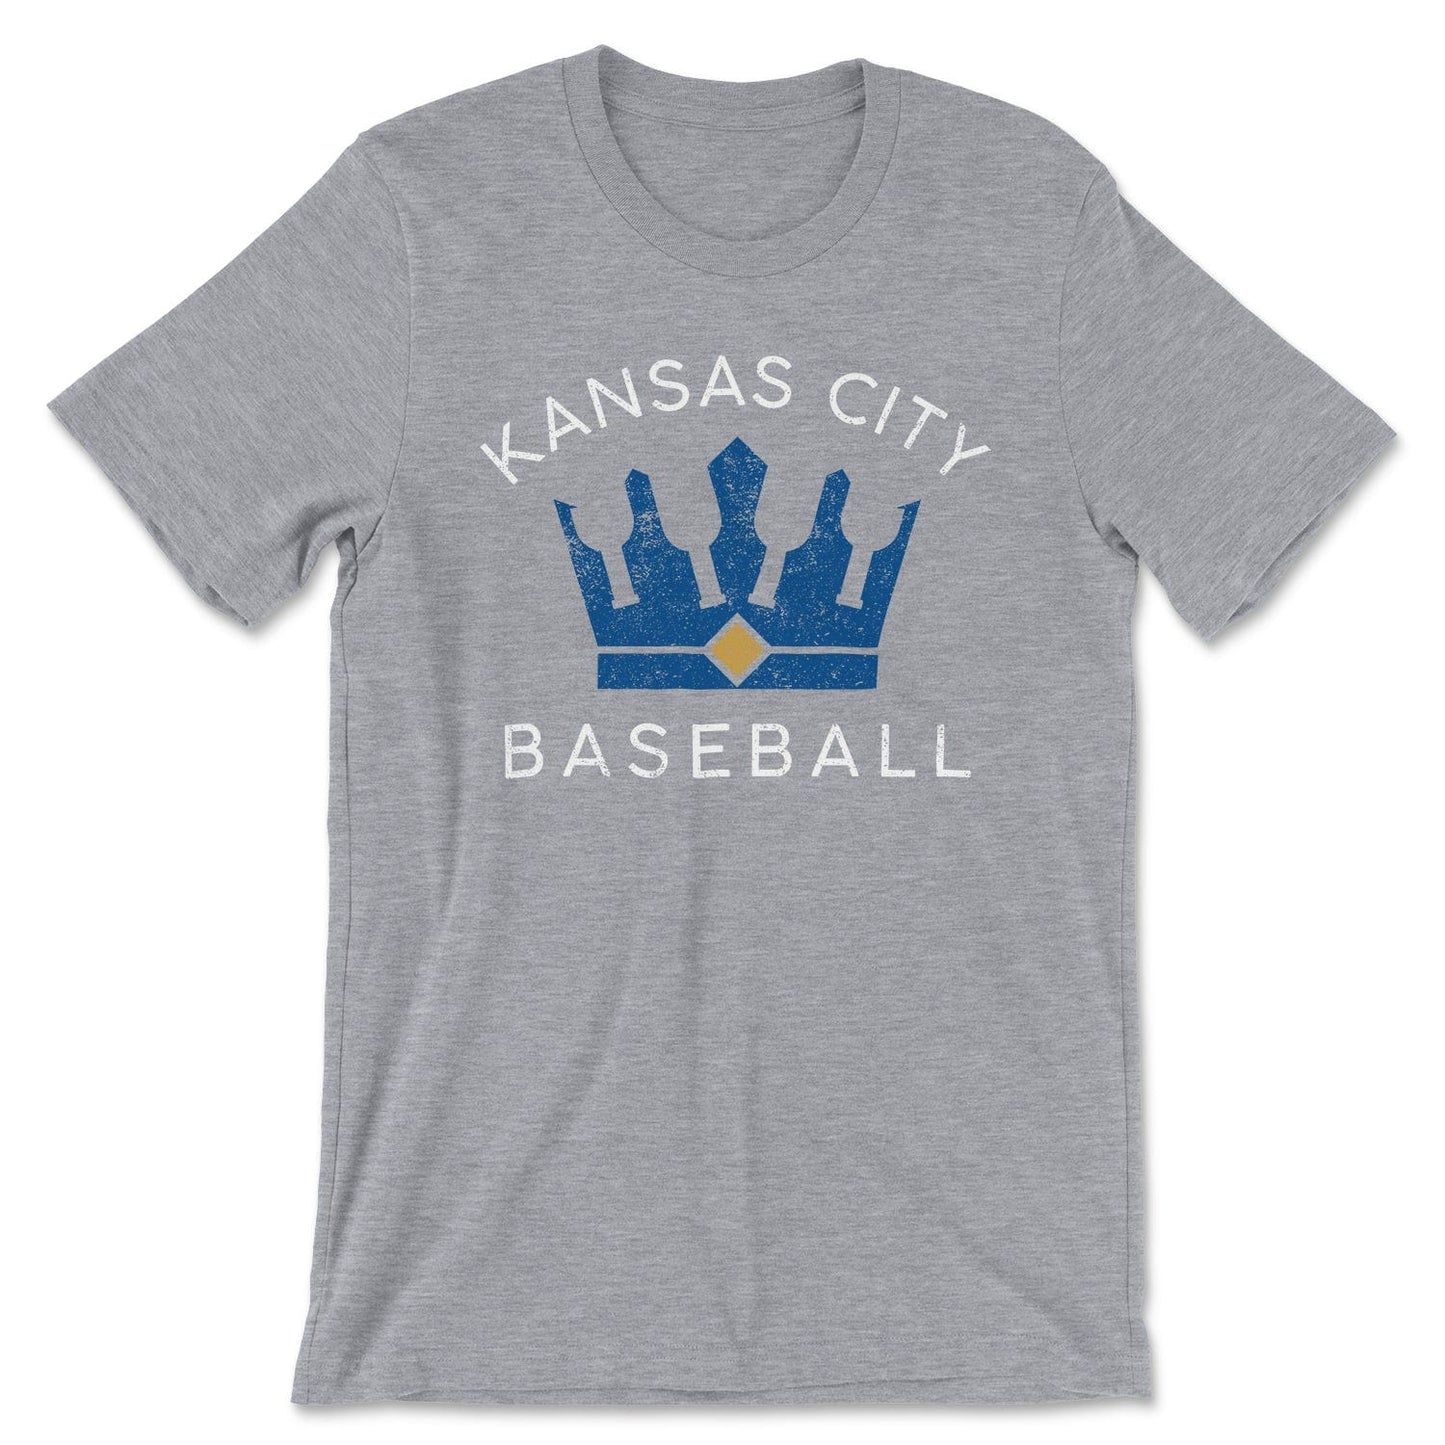 KC Swag Kansas City Royals white/blue KANSAS CITY BASEBALL BOTTLE CROWN on athletic heather grey t-shirt